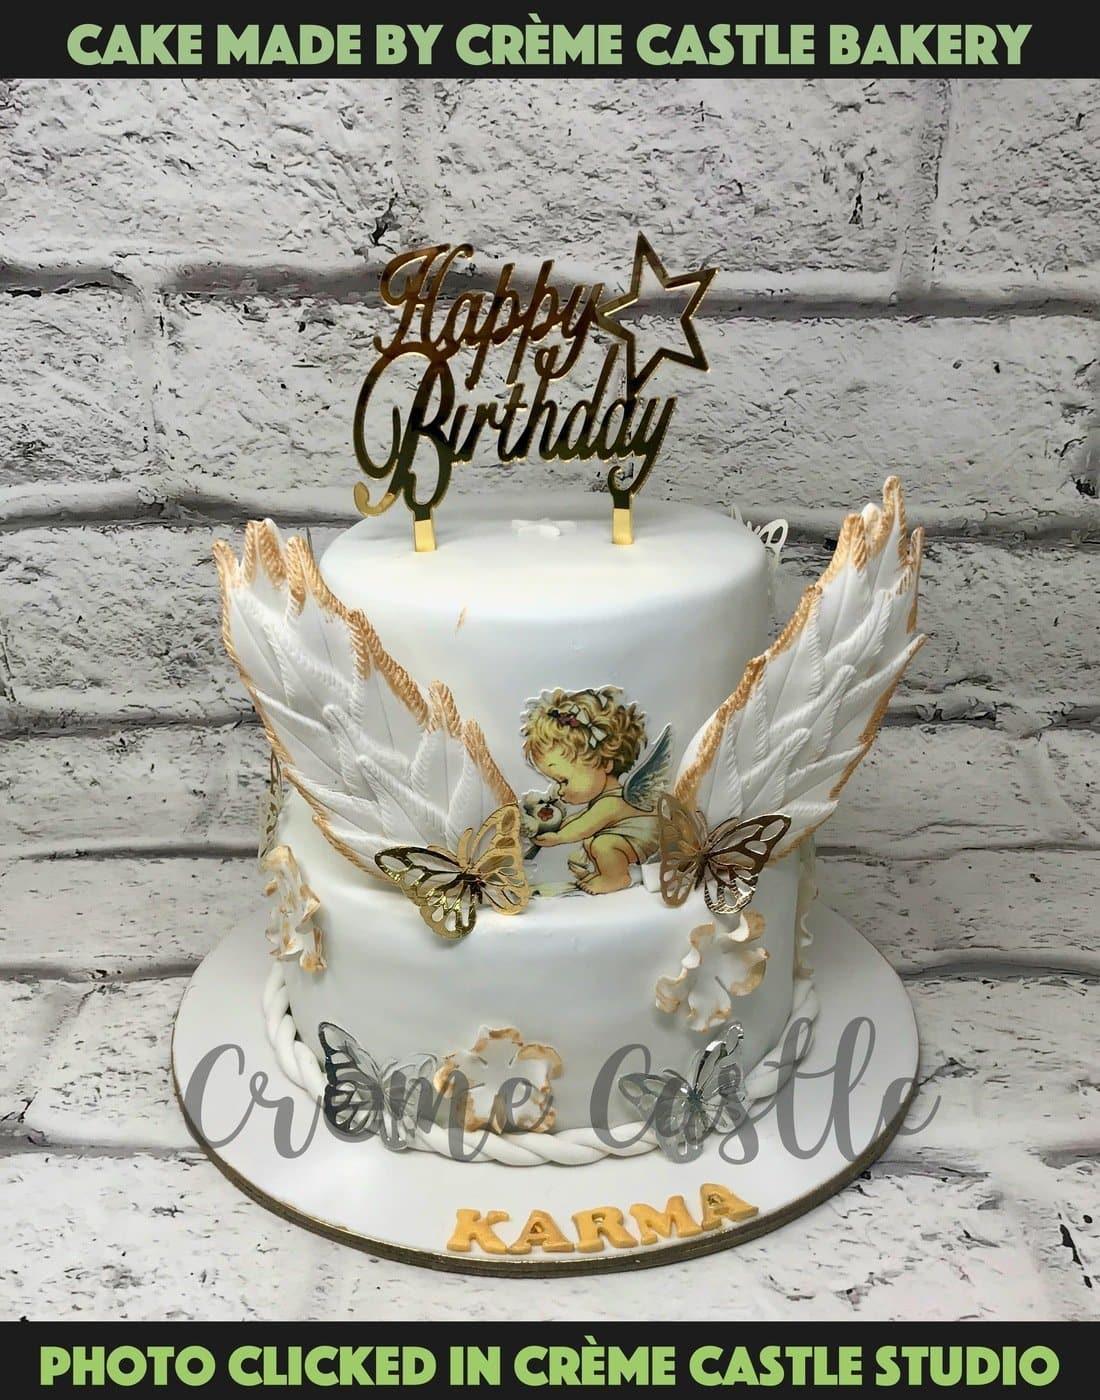 Baby Boy Angel Cake